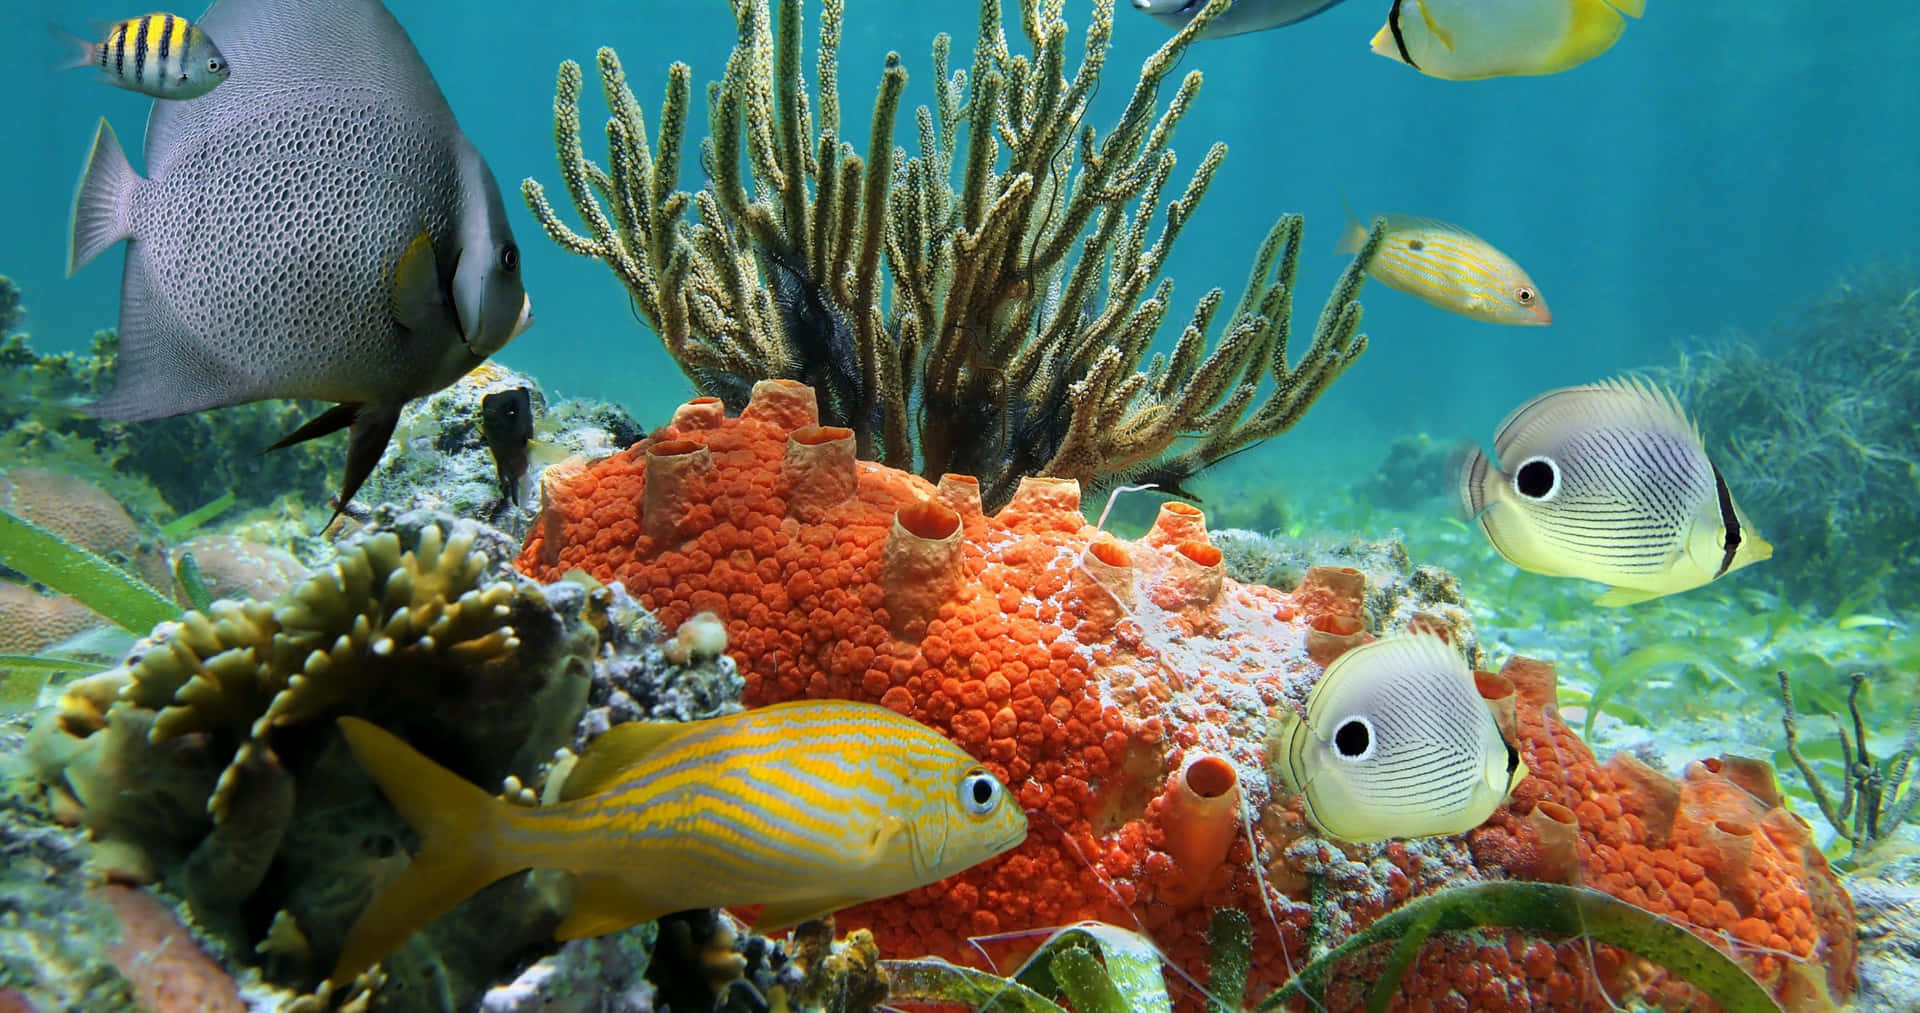 Impresionantesescenarios De Arrecifes De Coral Submarinos